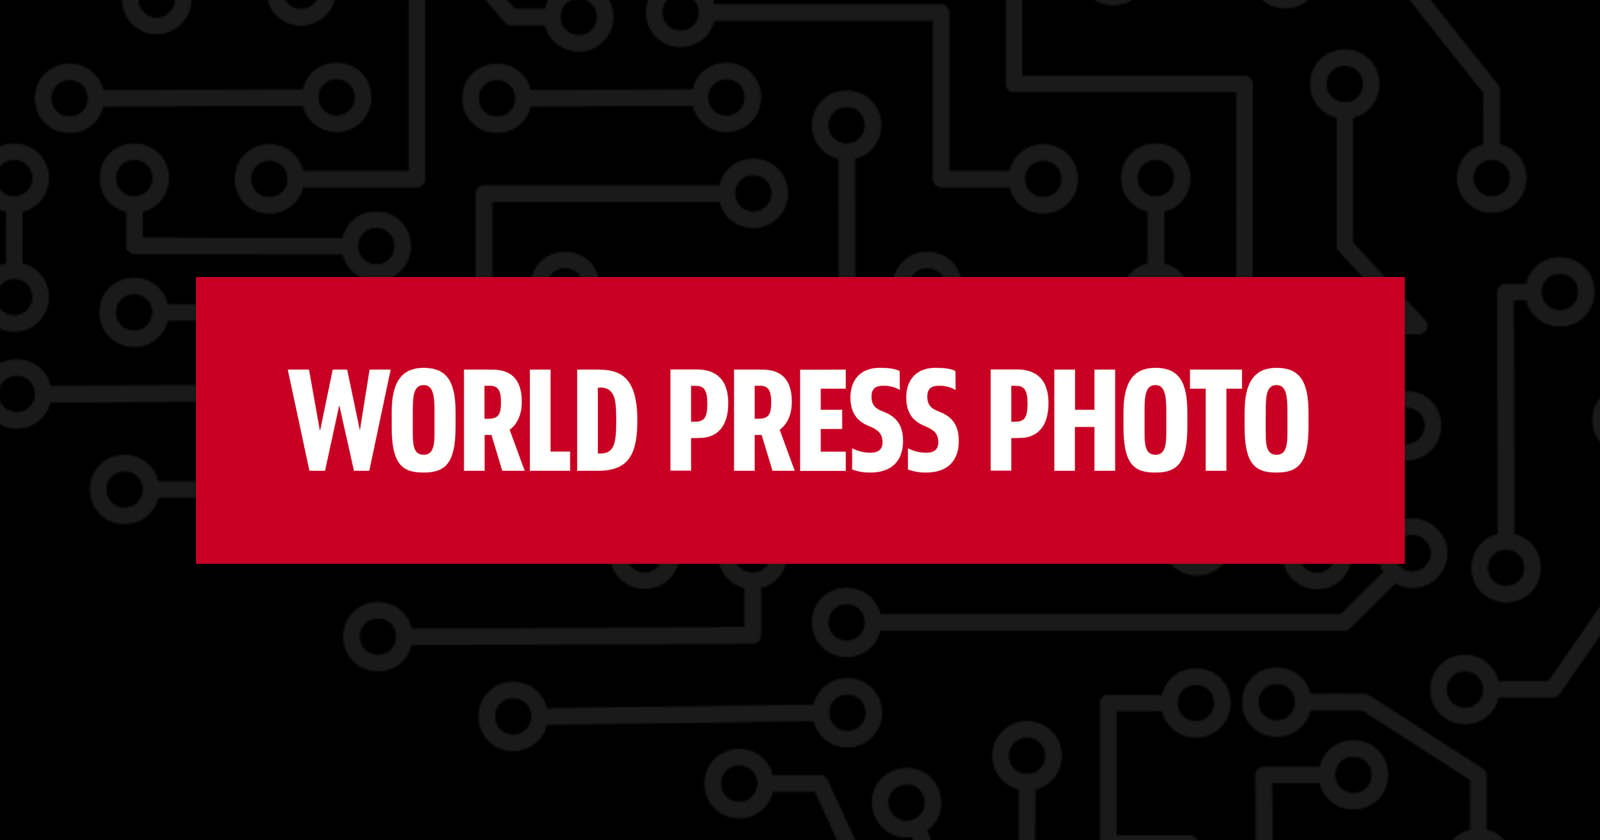  world press photo contest backtracks after photographer backlash 